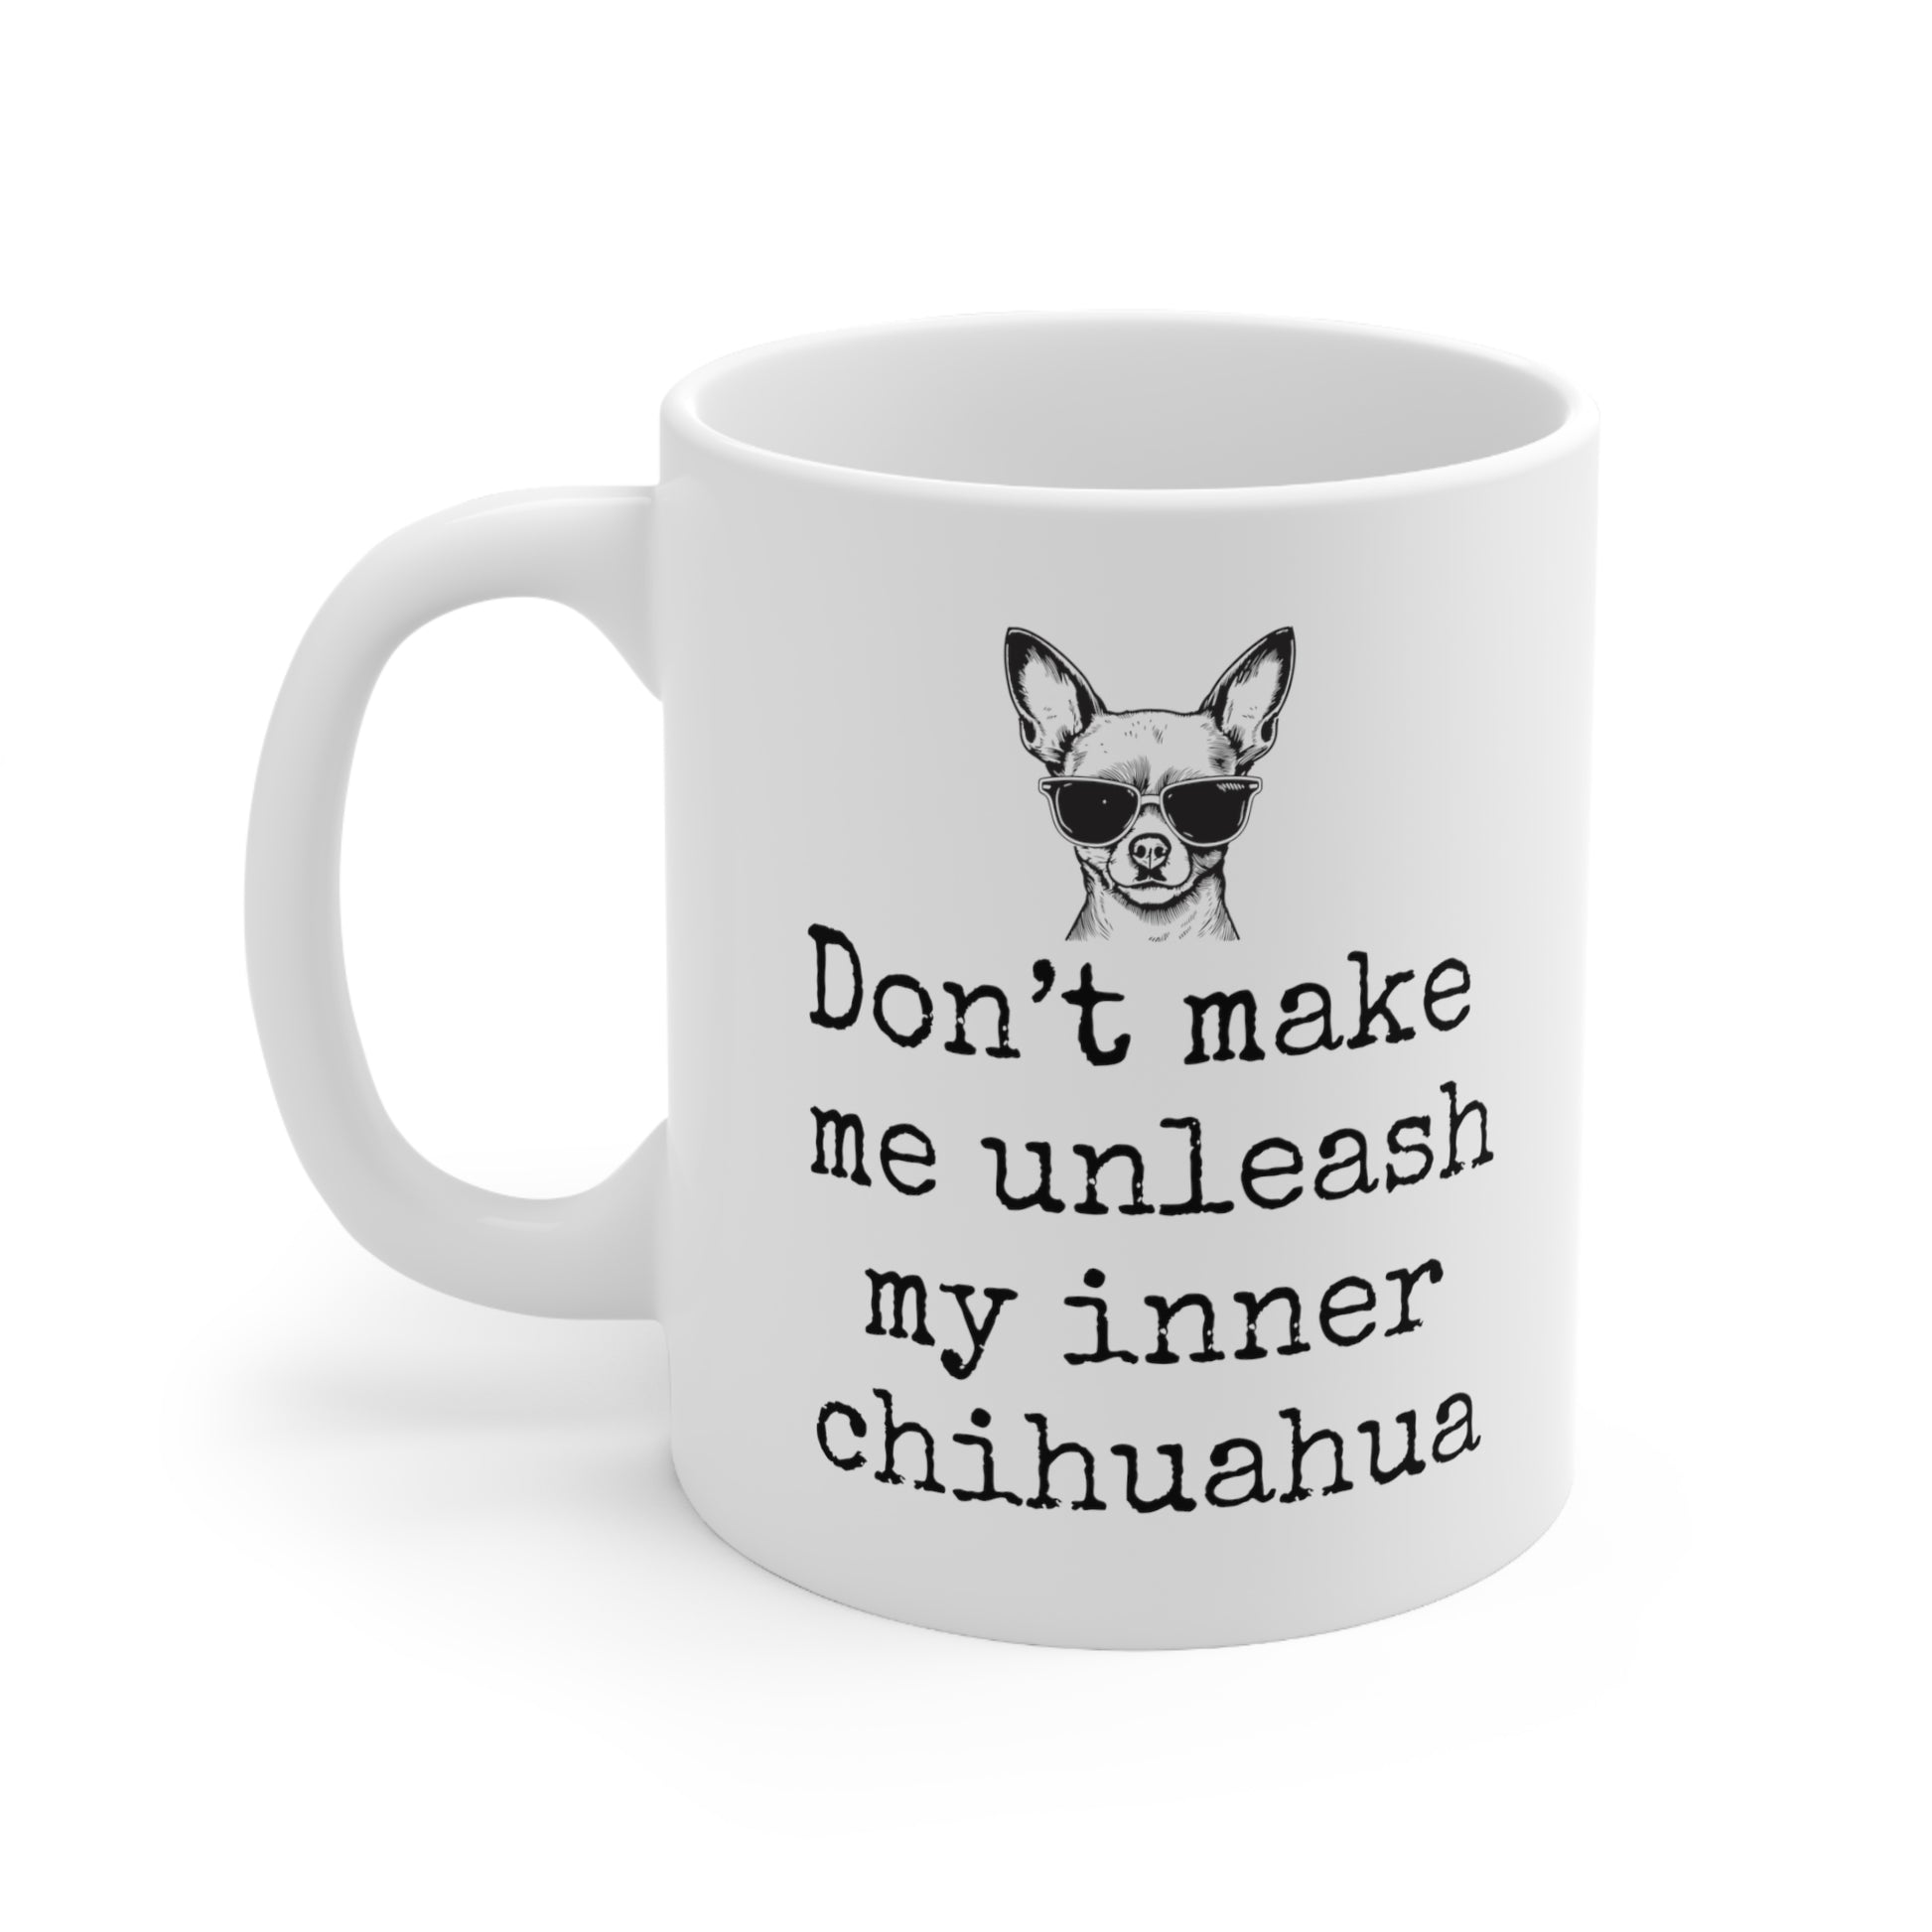 Grumpy coffee mug